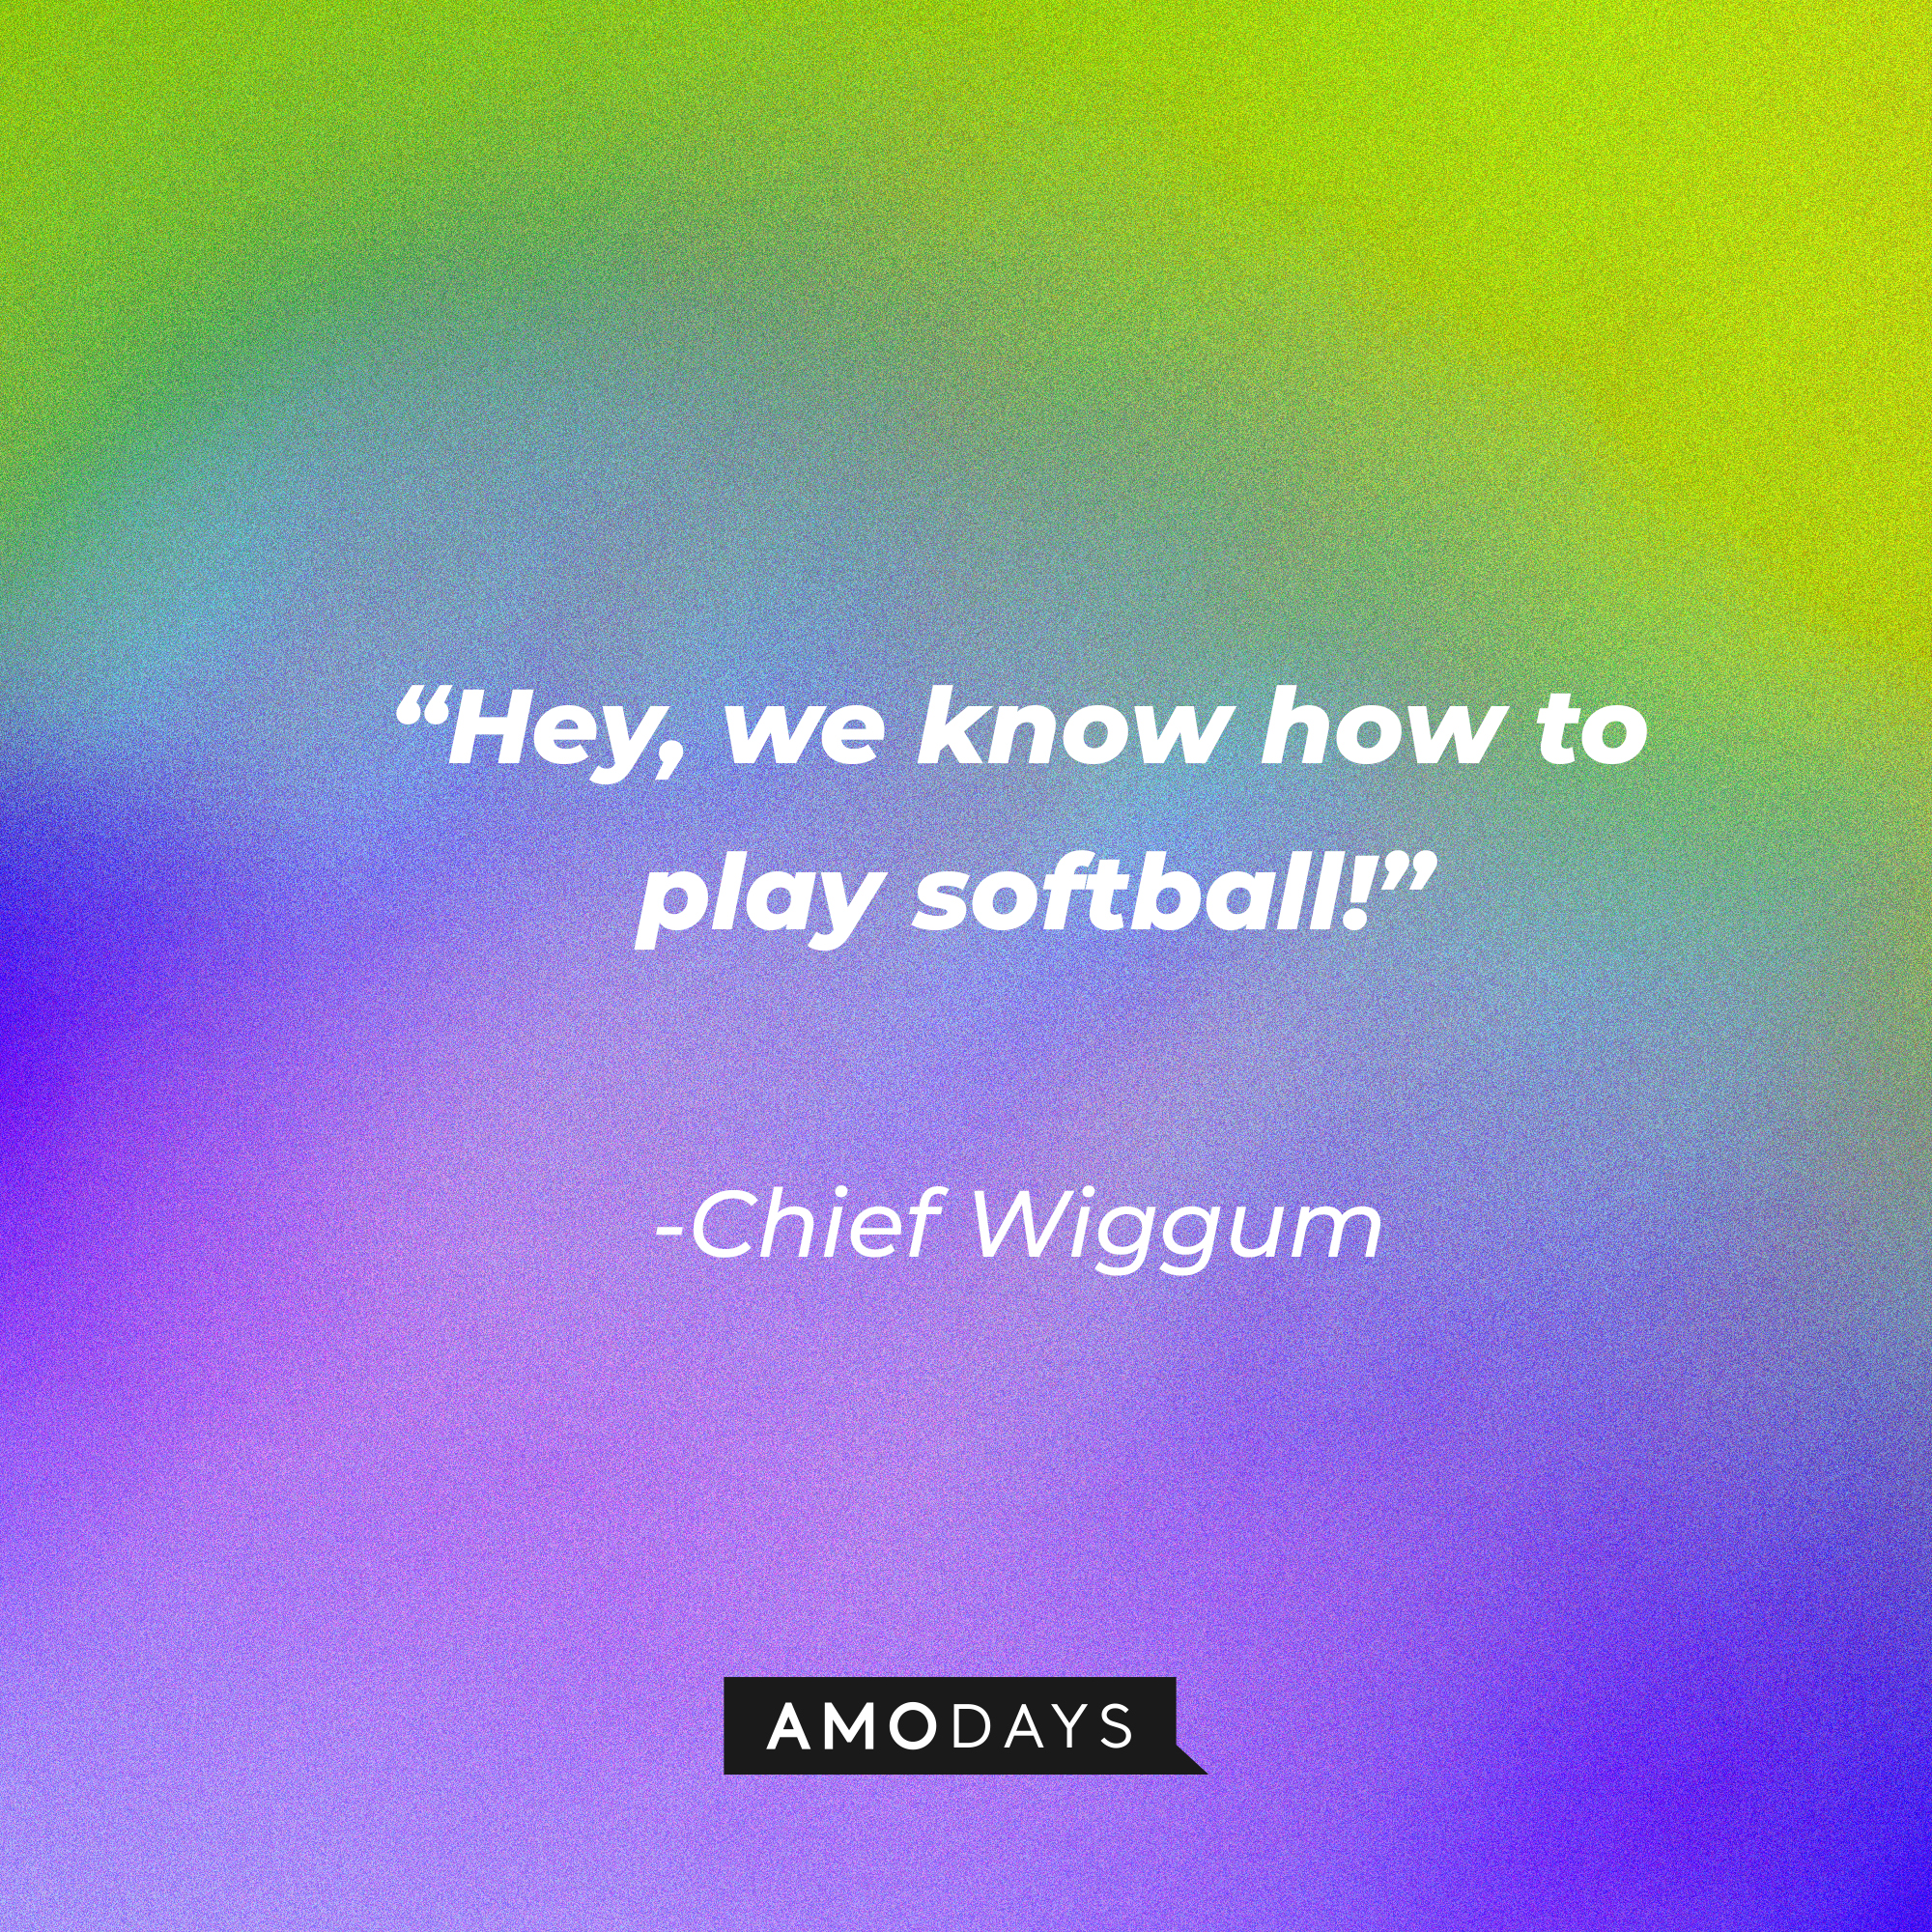 Chief Wiggum’s quote: “Hey, we know how to play softball!” | Source: Amodays